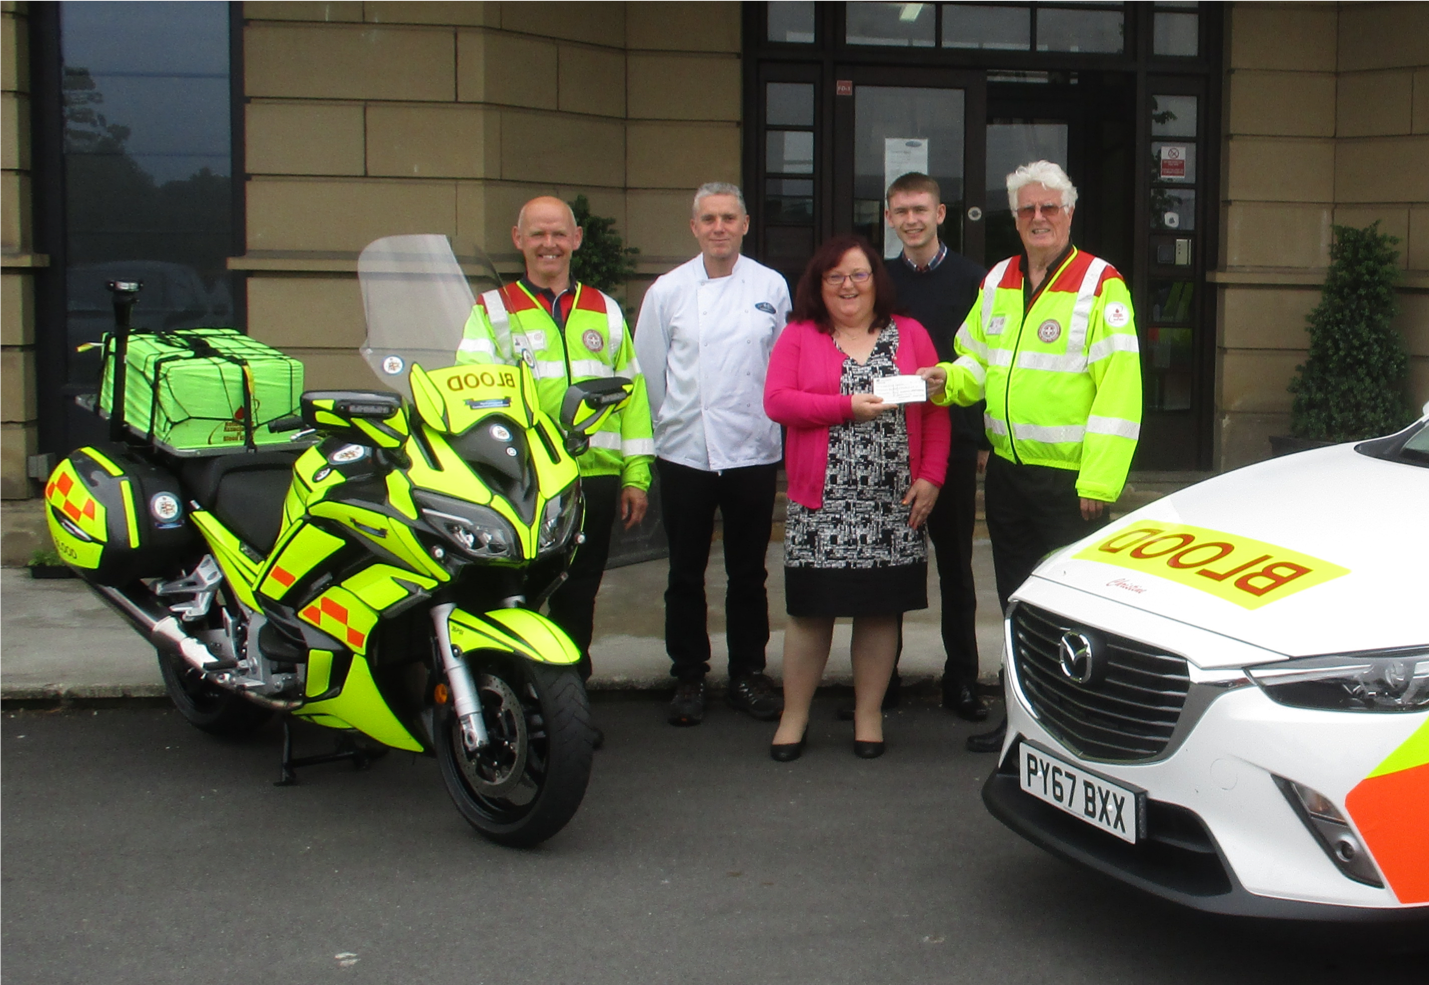 Blood Bikes Cumbria receiving the donation